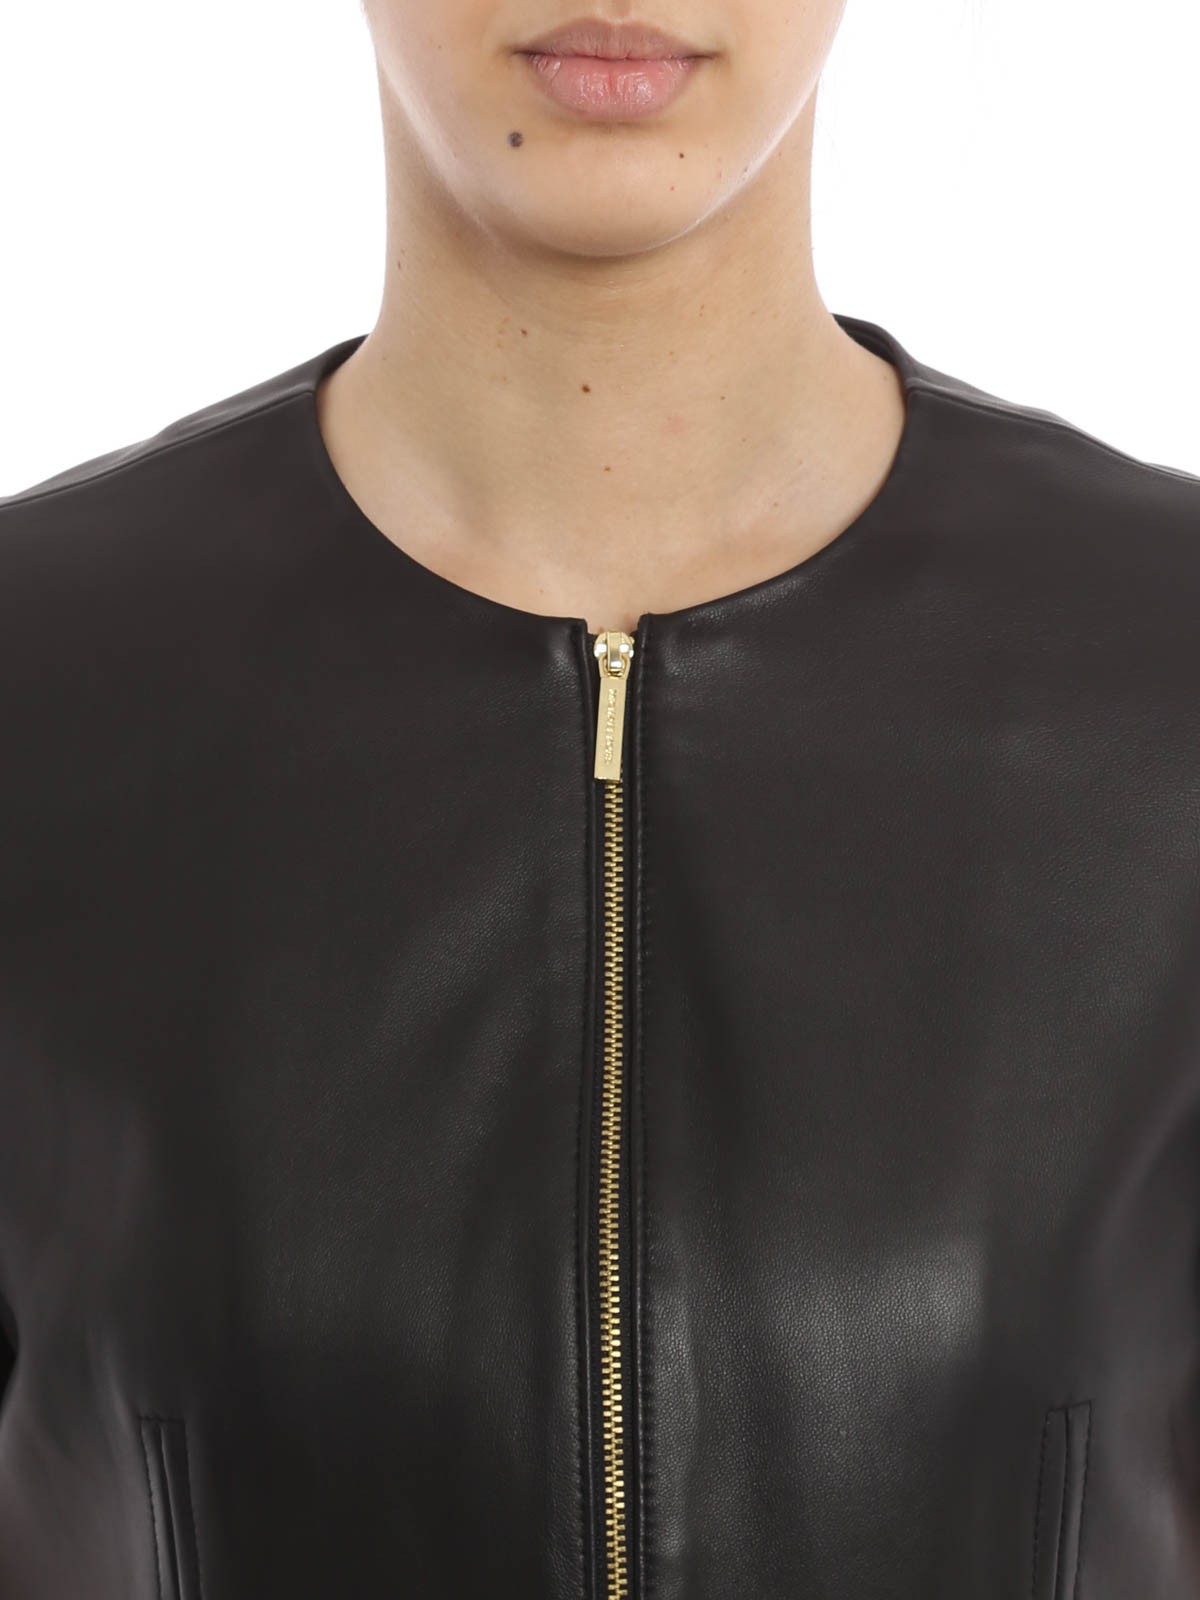 Leather jacket Michael Kors  Leather jacket in black  MB92J0B8RK001